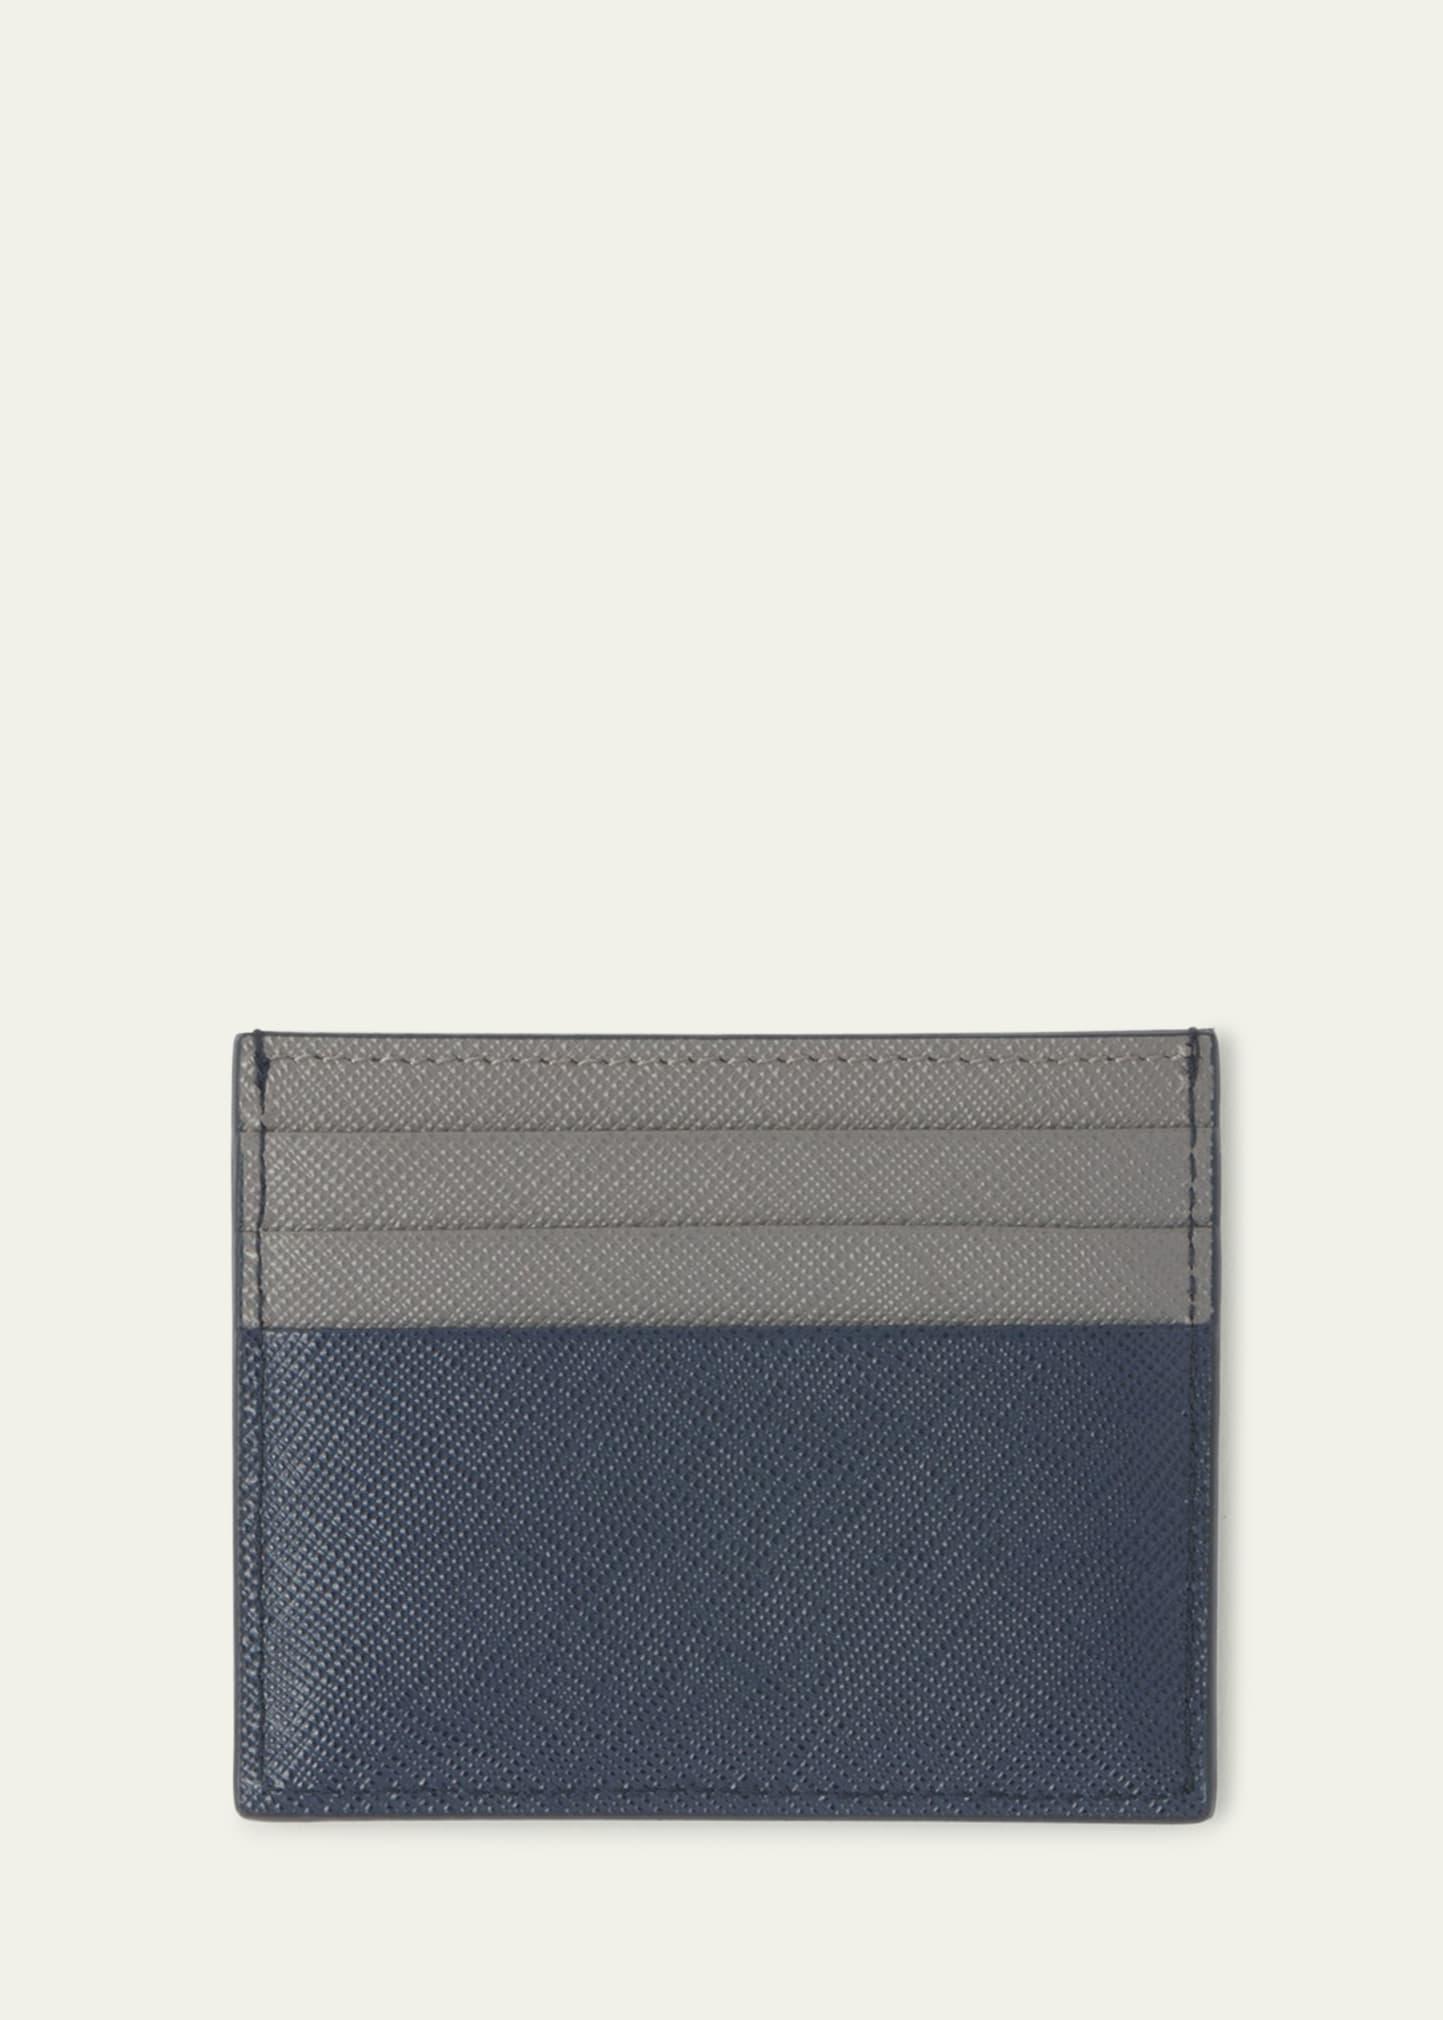 Prada Saffiano Leather Wallet, Baltico